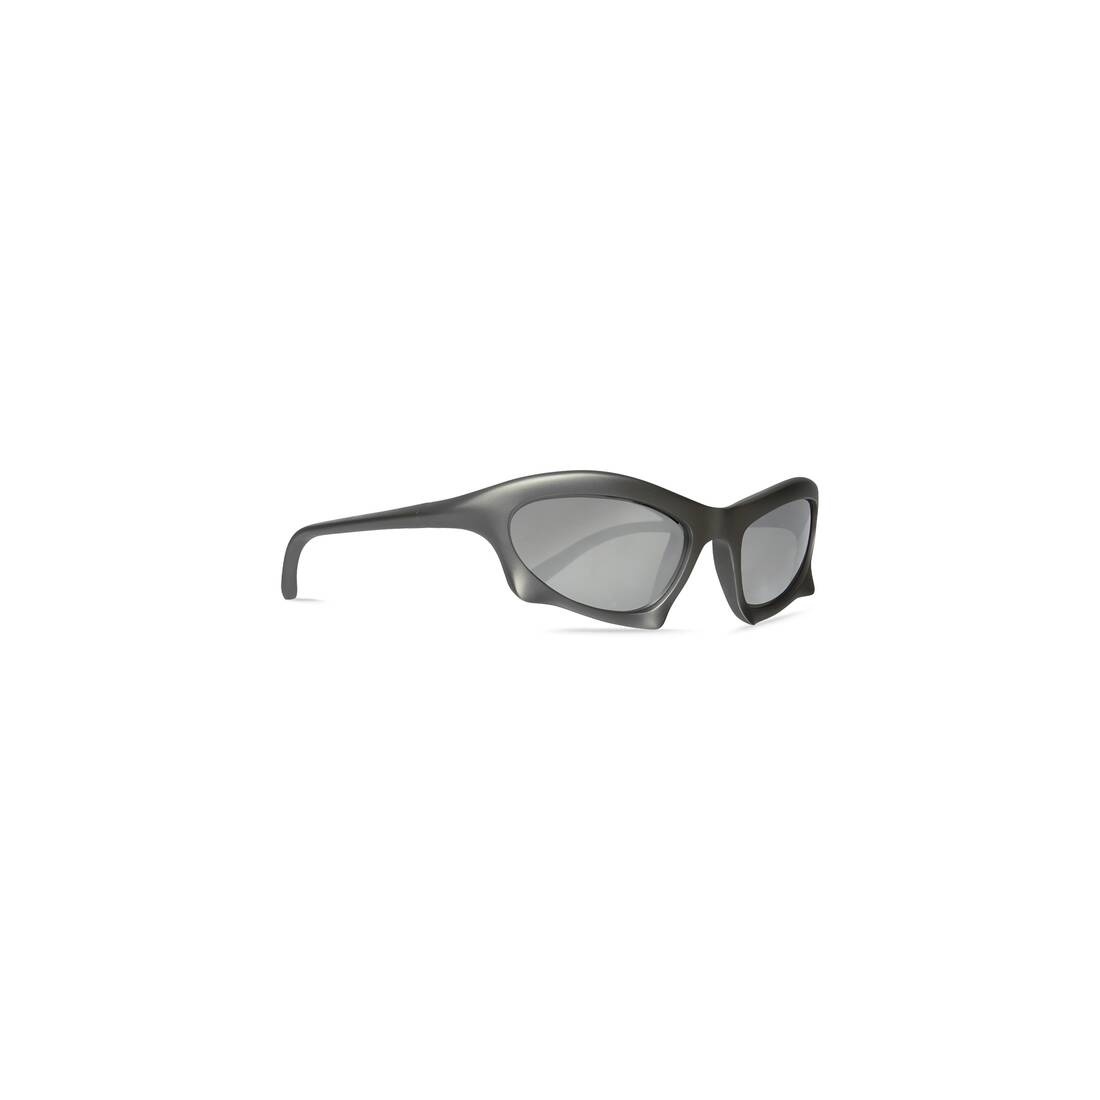 Bat Rectangle Sunglasses in Silver - 2